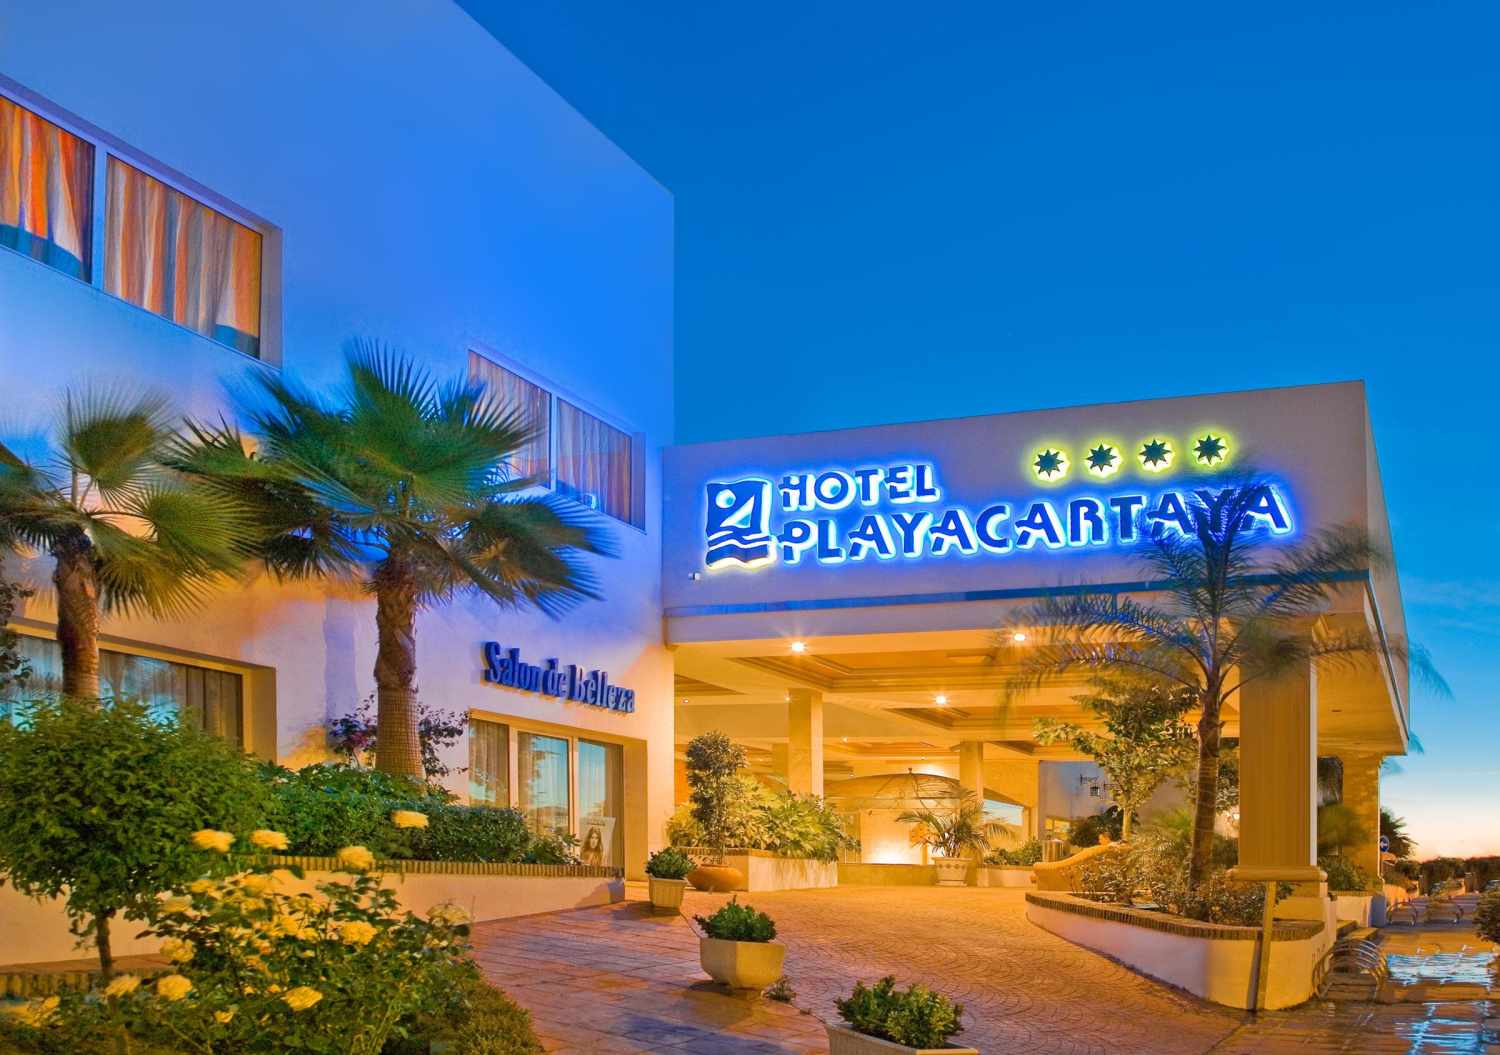 Playacartaya Aquapark & Spa Hotel, Cartaya, Costa de la Luz, Spanje